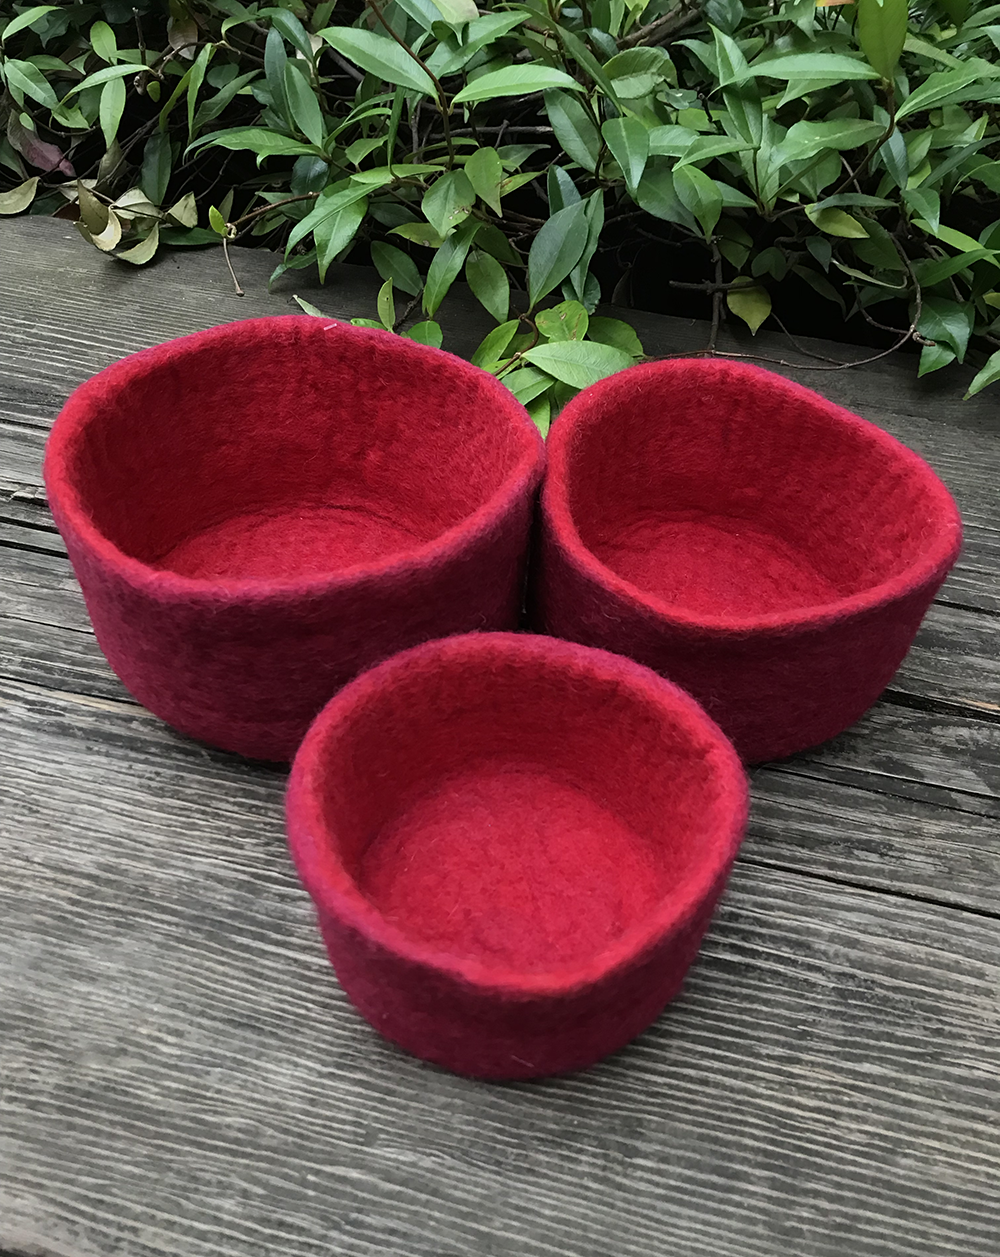 Red Wool Felt Bowl Set